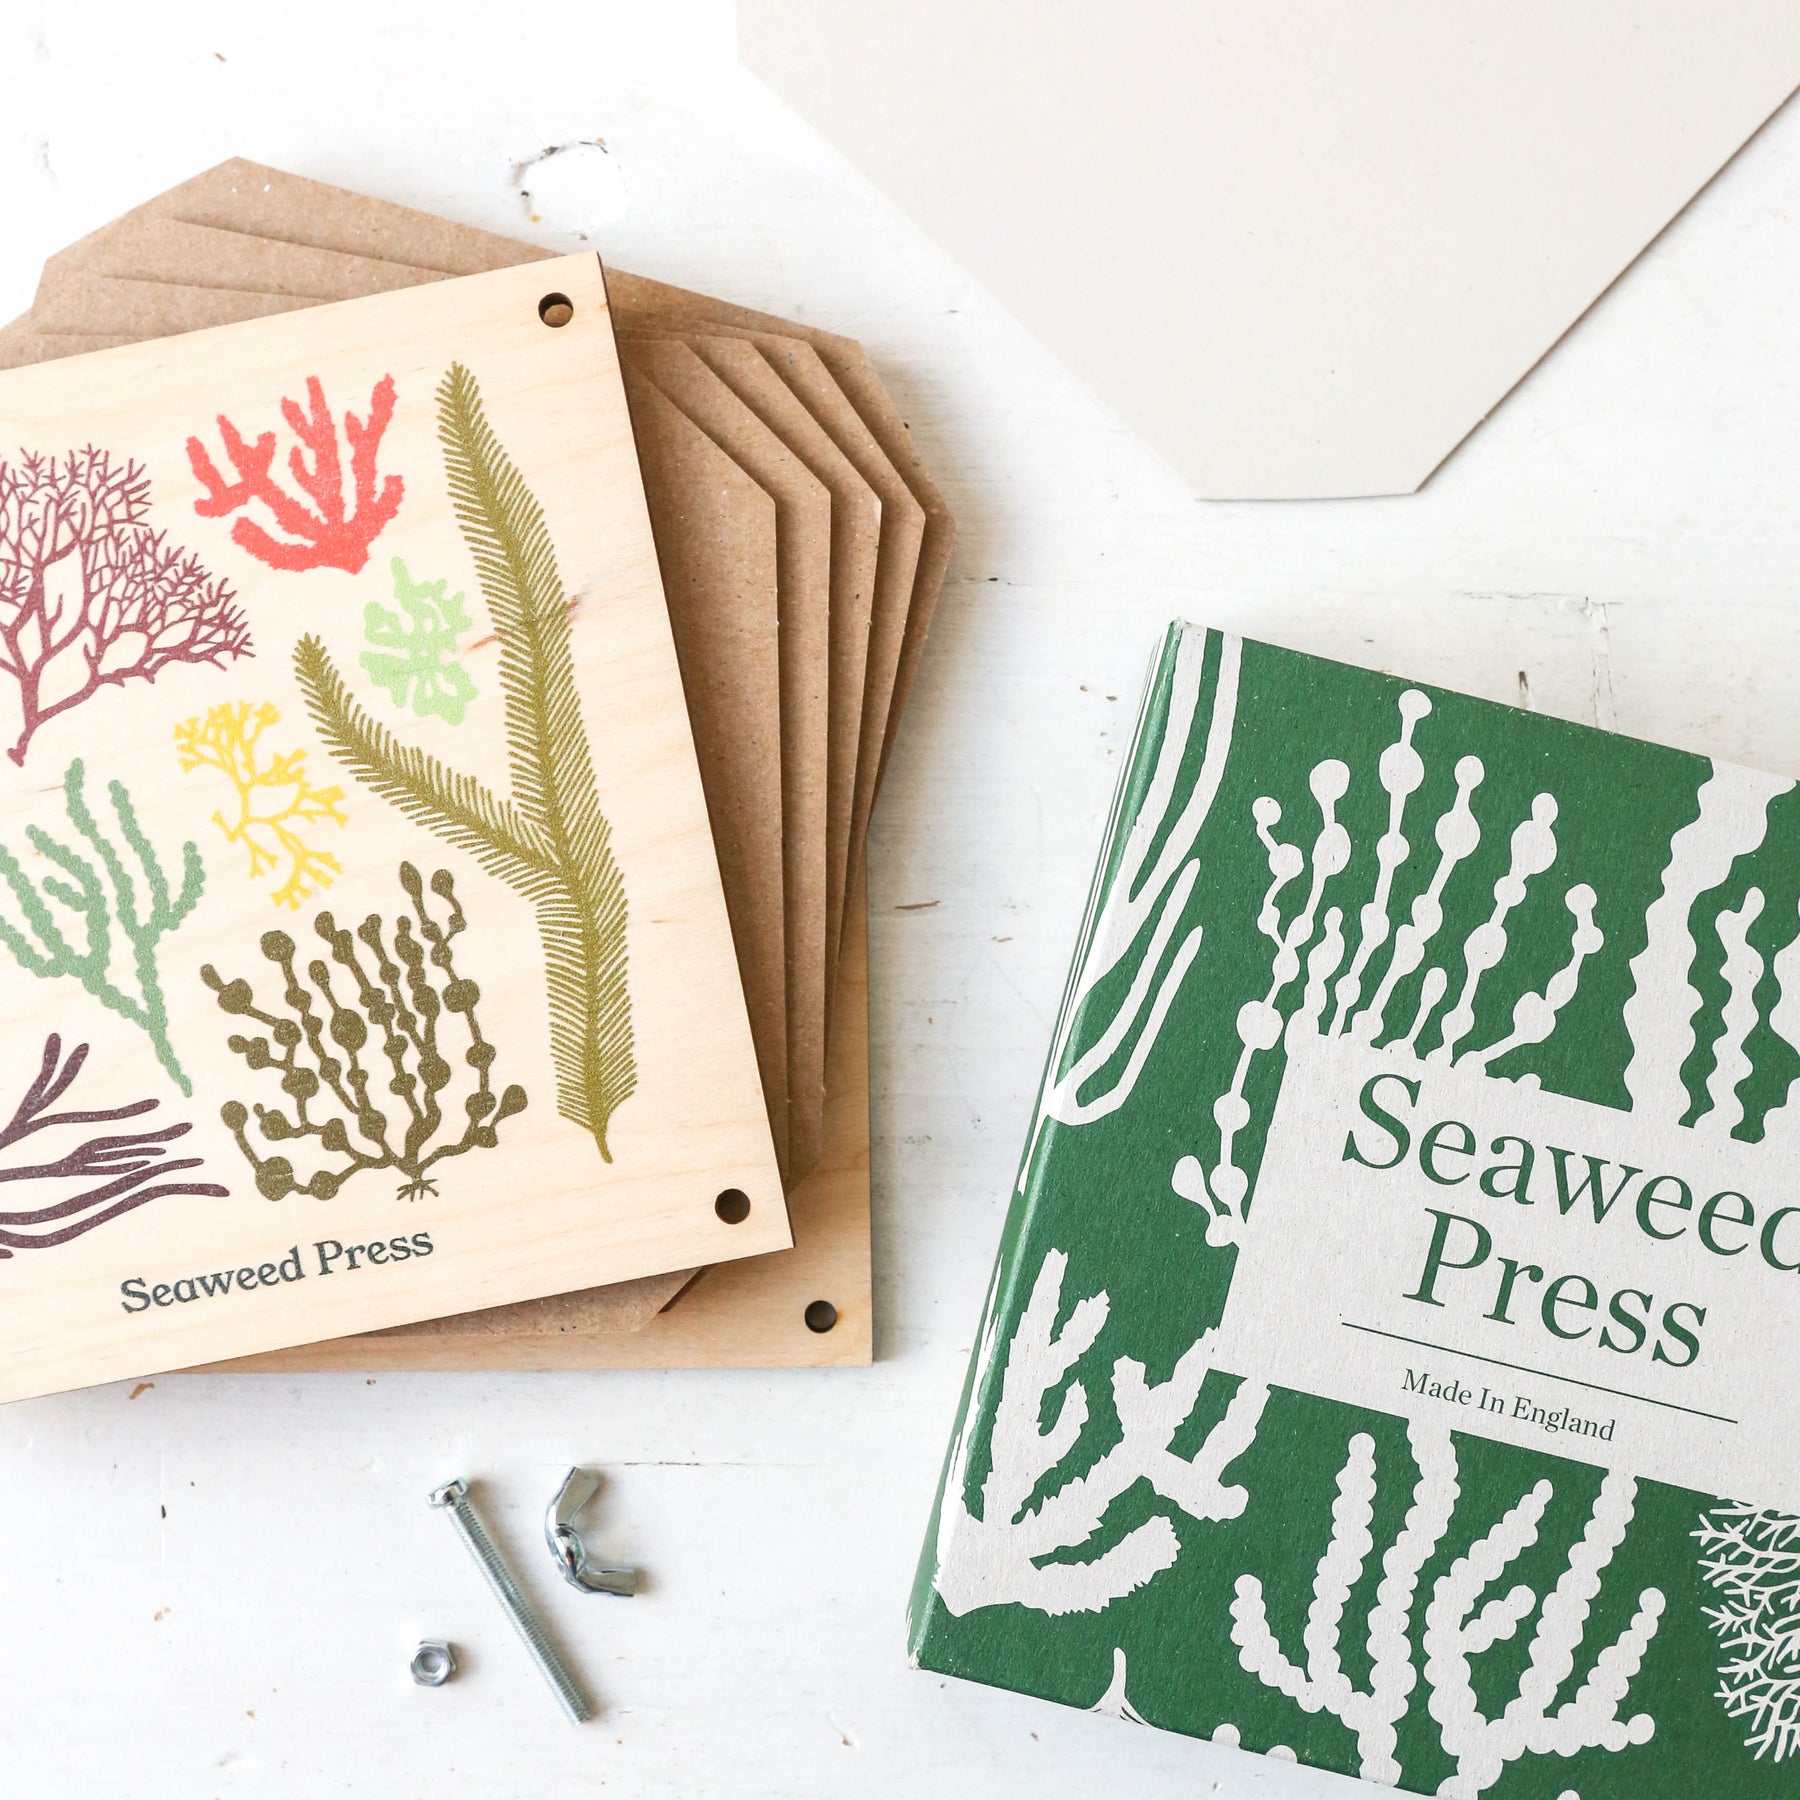 Seaweed Press from Berylune